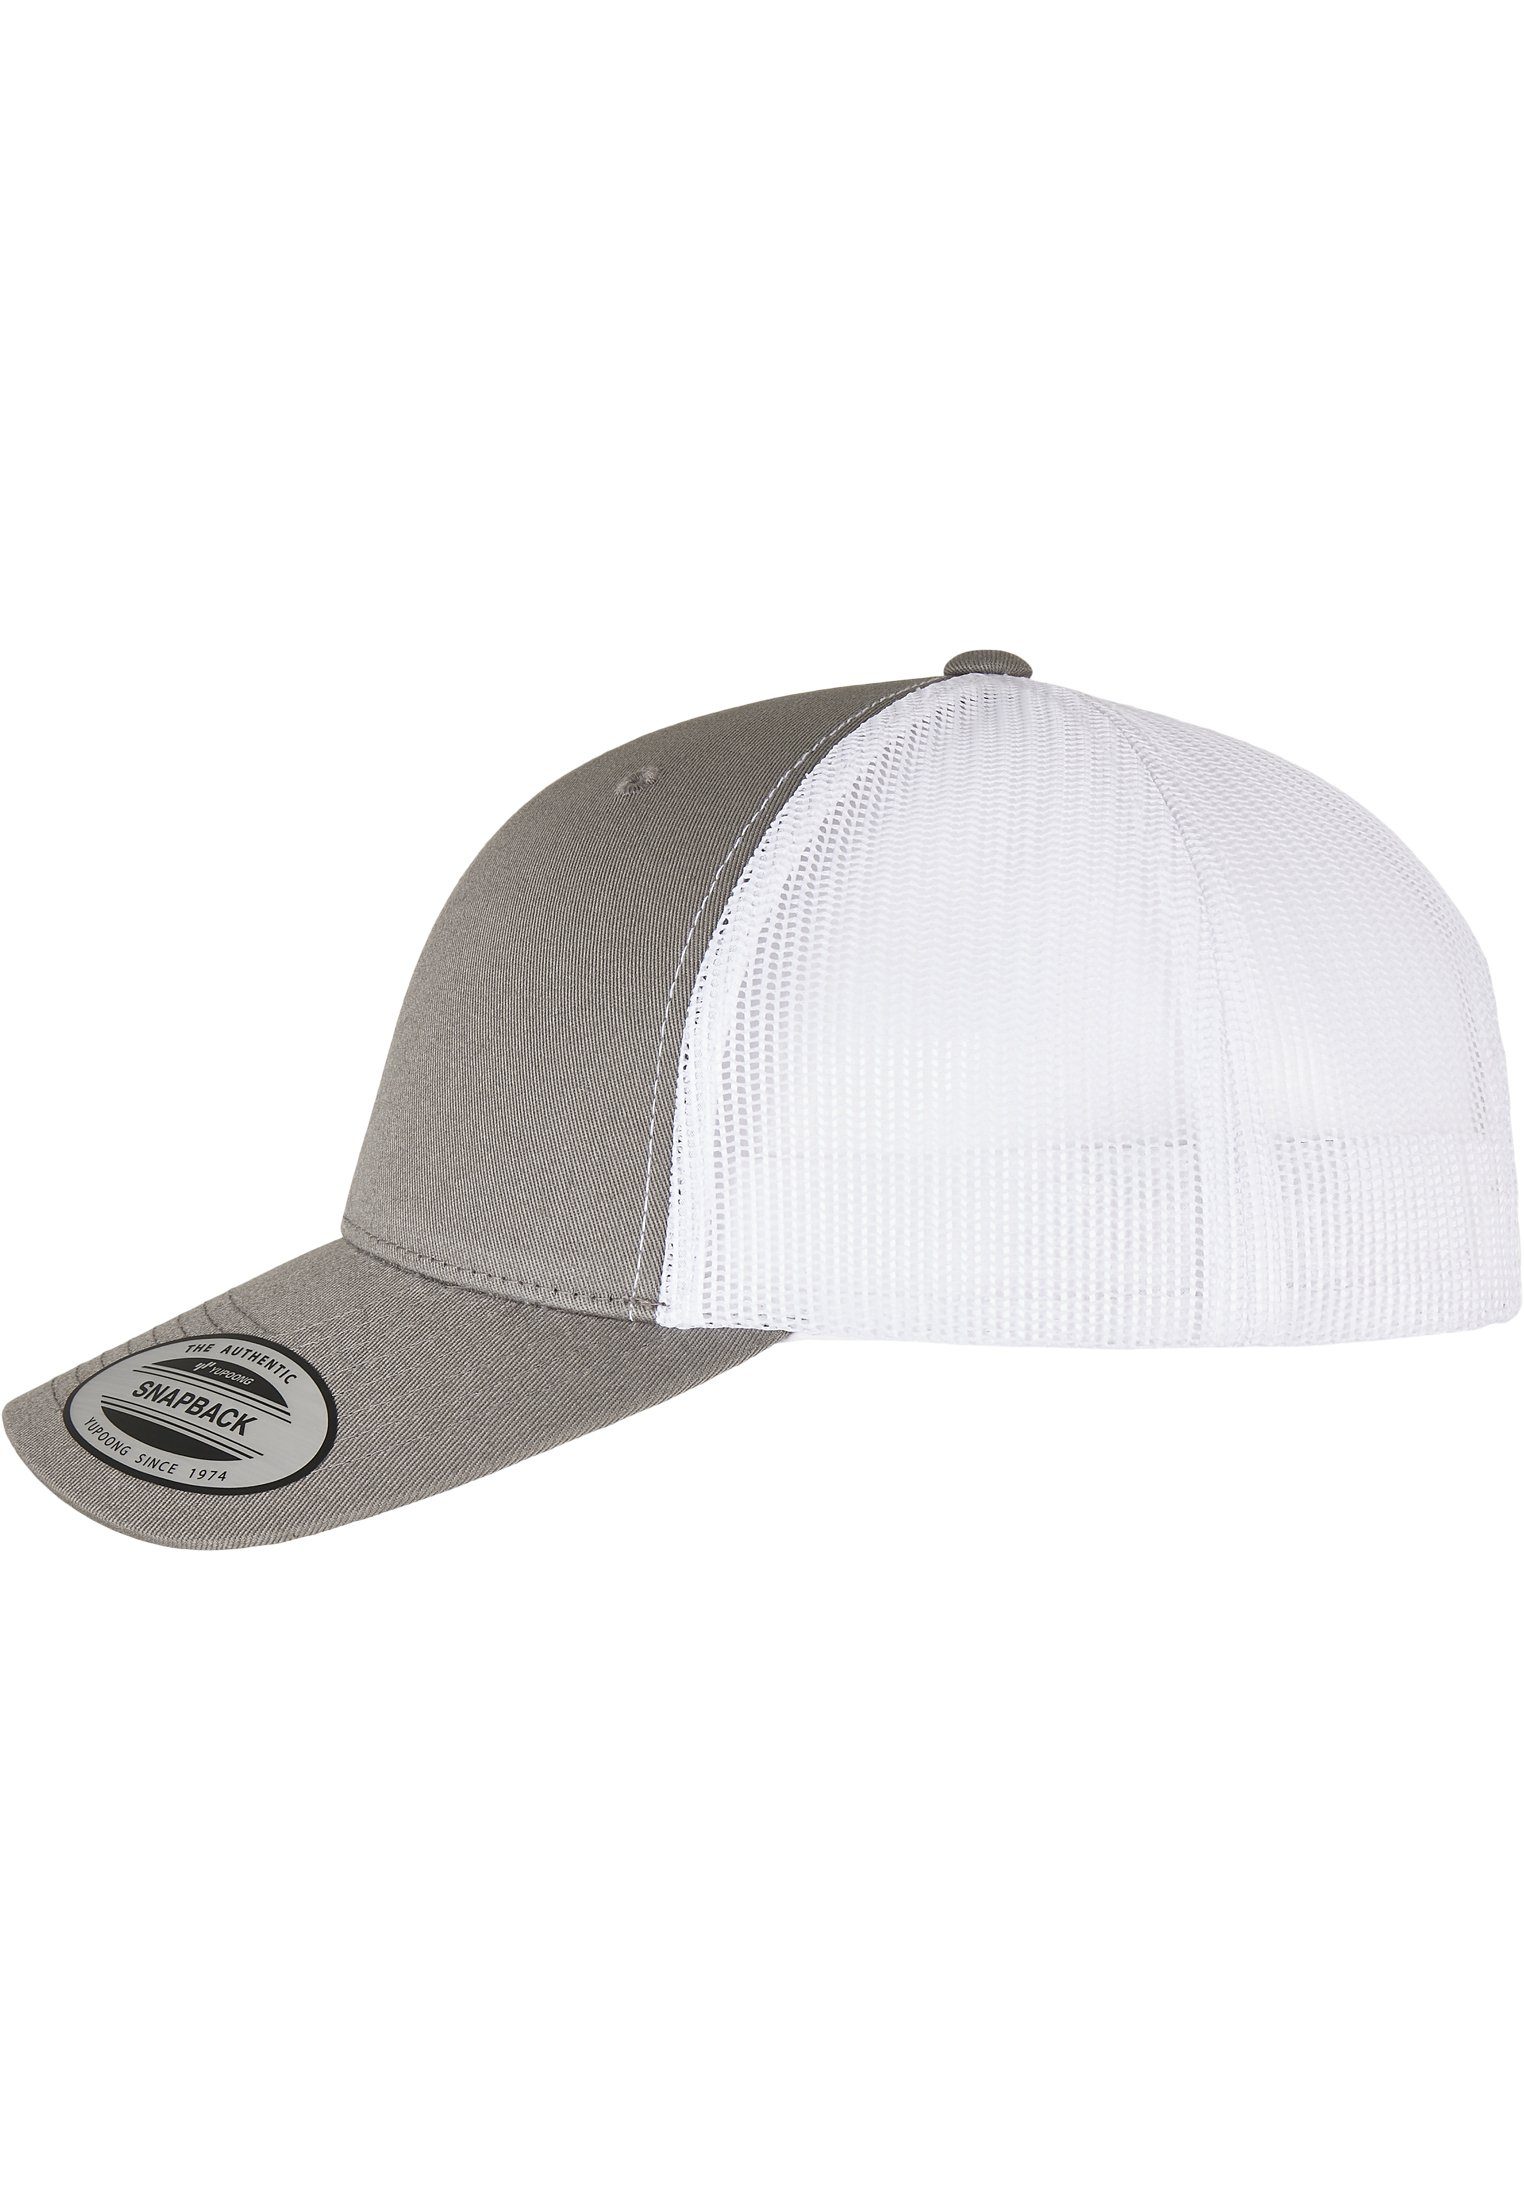 CAP Flex grey/white 2-TONE RECYCLED TRUCKER Flexfit Cap CLASSICS Caps RETRO YP